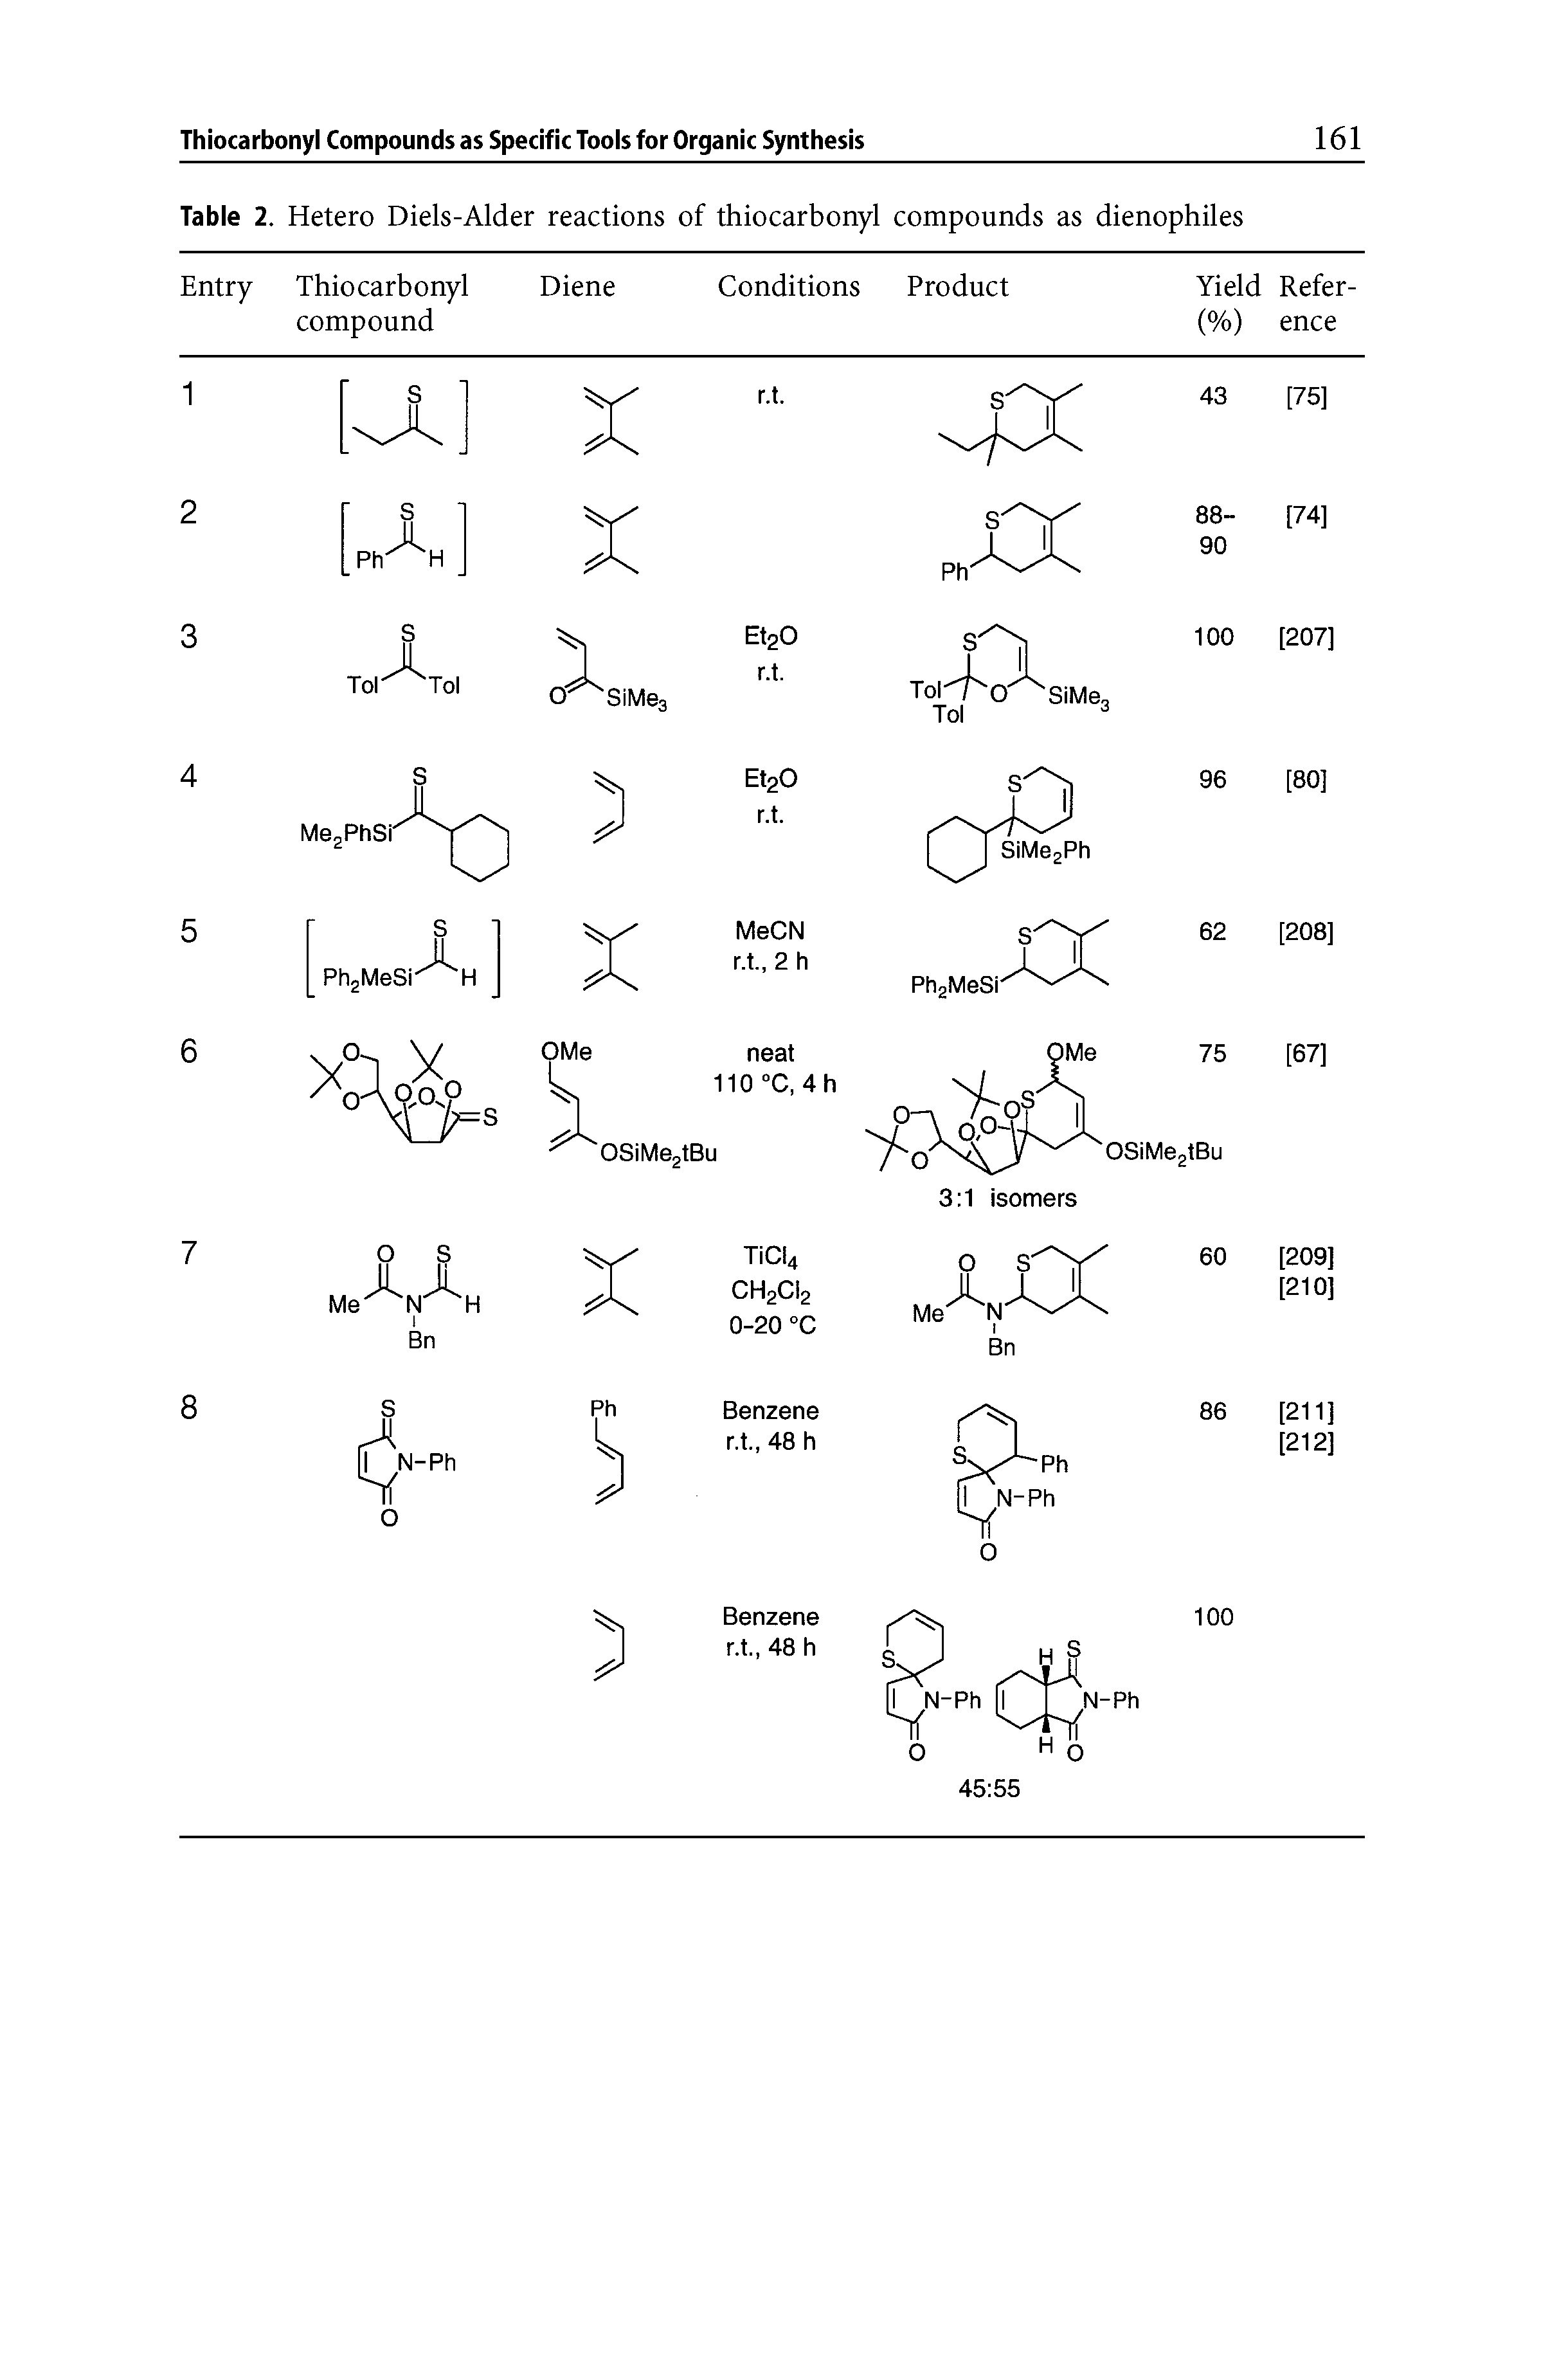 Table 2. Hetero Diels-Alder reactions of thiocarbonyl compounds as dienophiles...